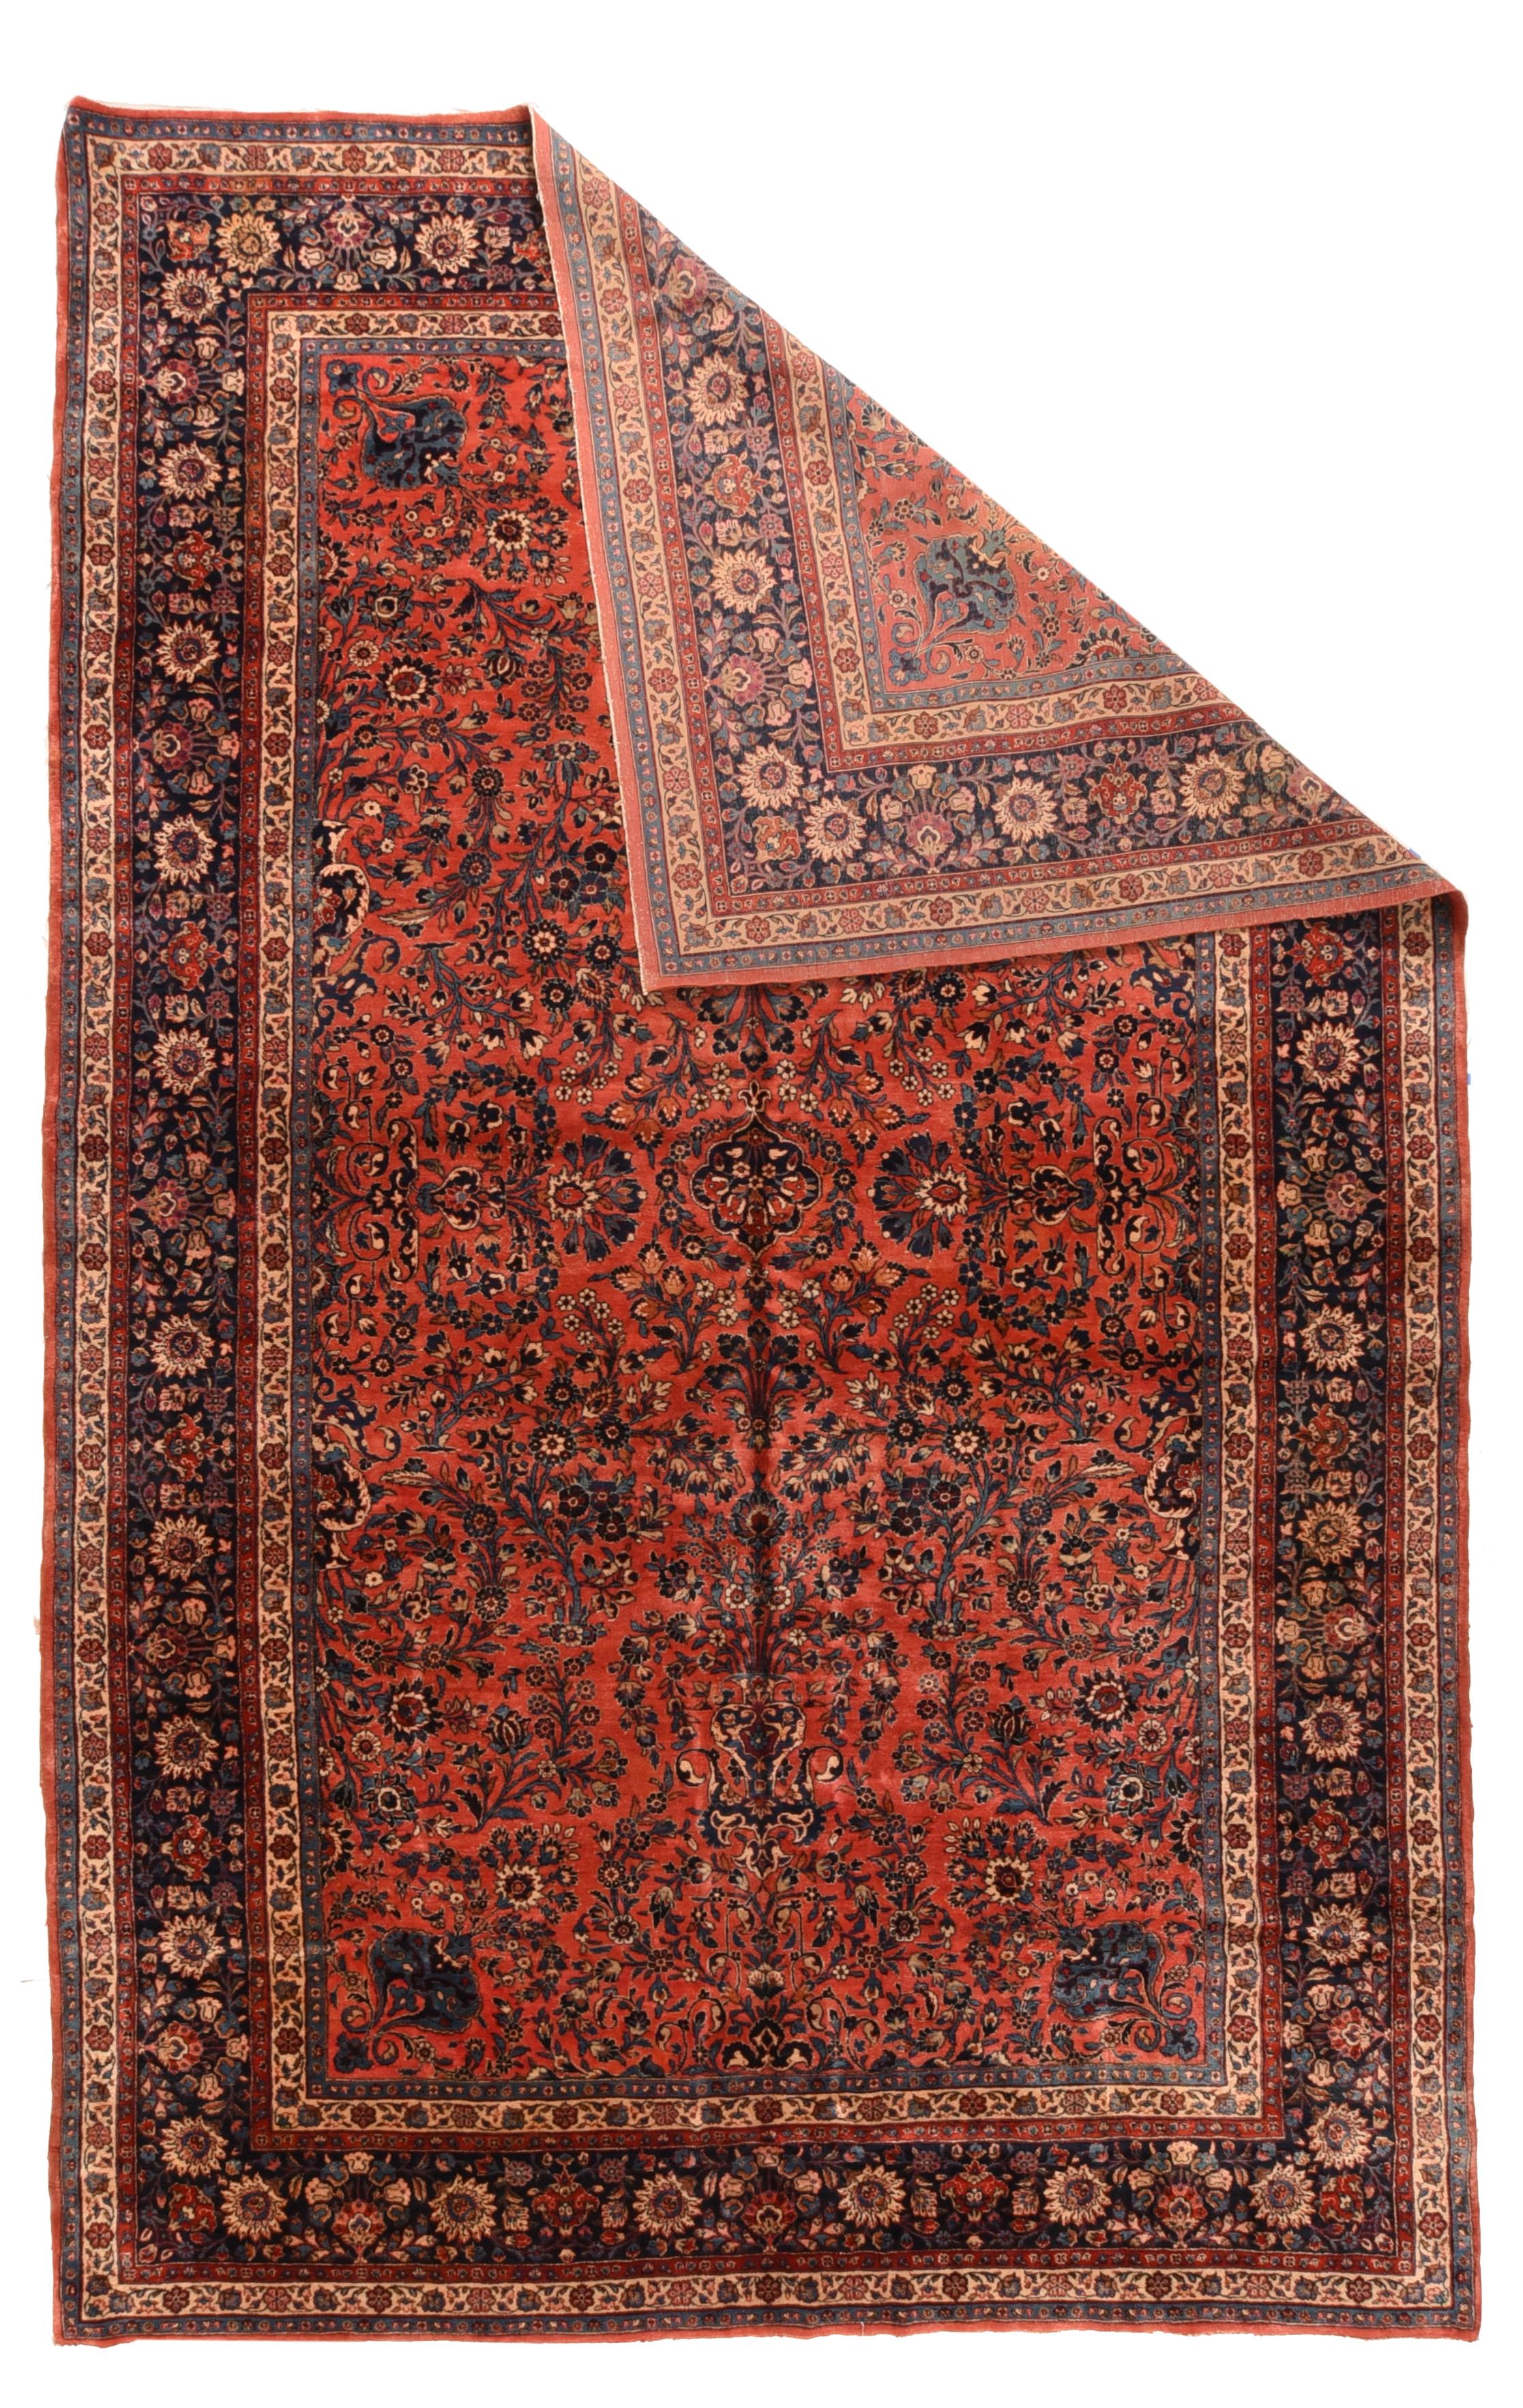 Antique Persian Kashan Area Rug
 